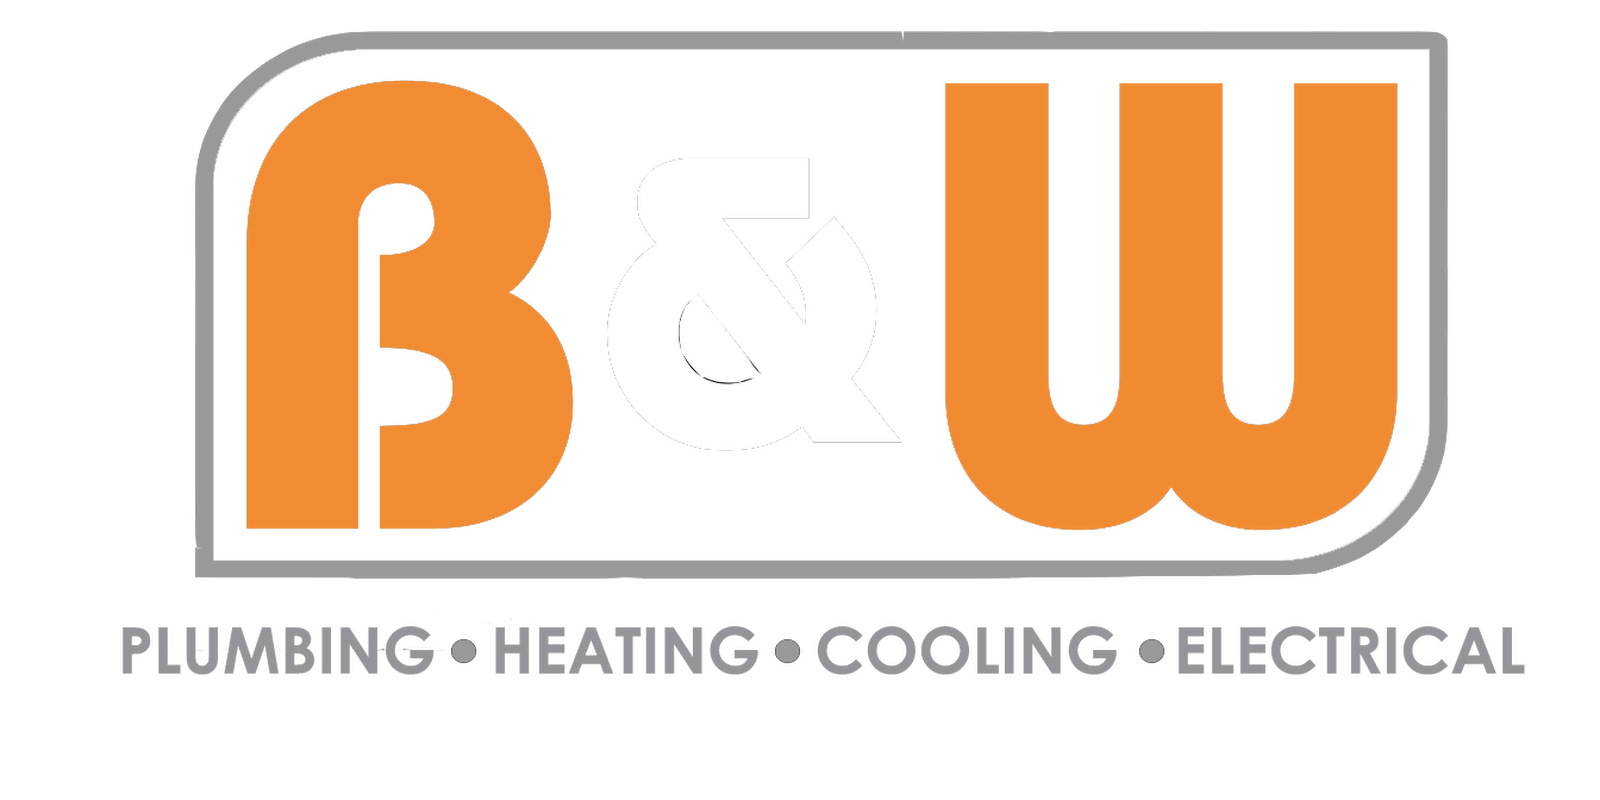 B&W Plumbing-Heating-Cooling-Electrical